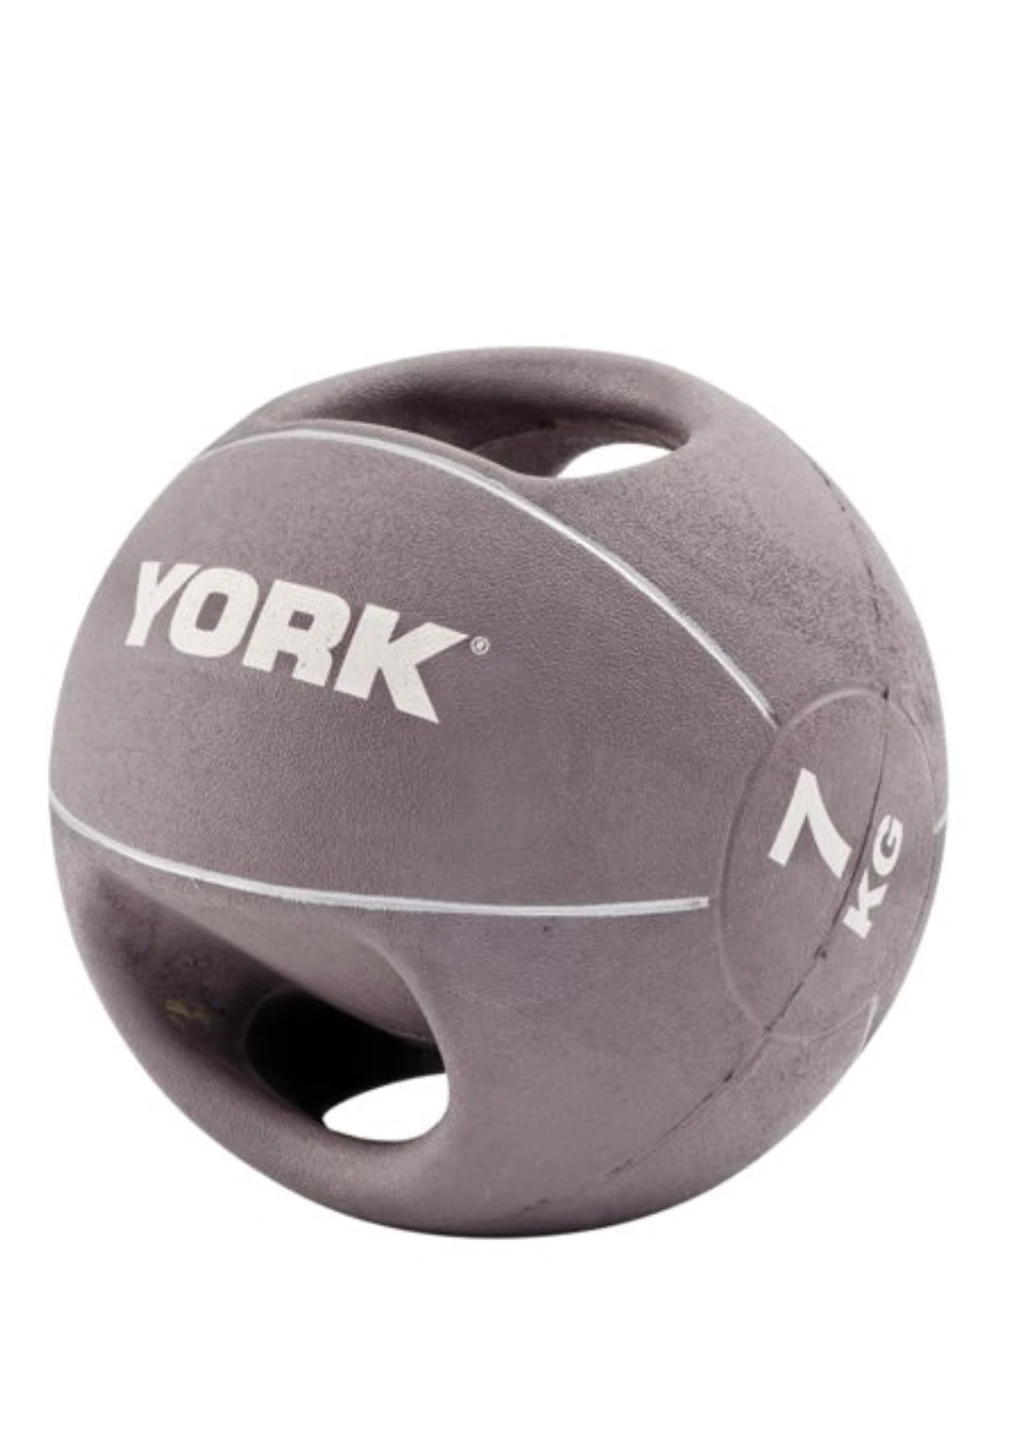 Мяч медбол 7 кг York Fitness с двумя ручками, серый